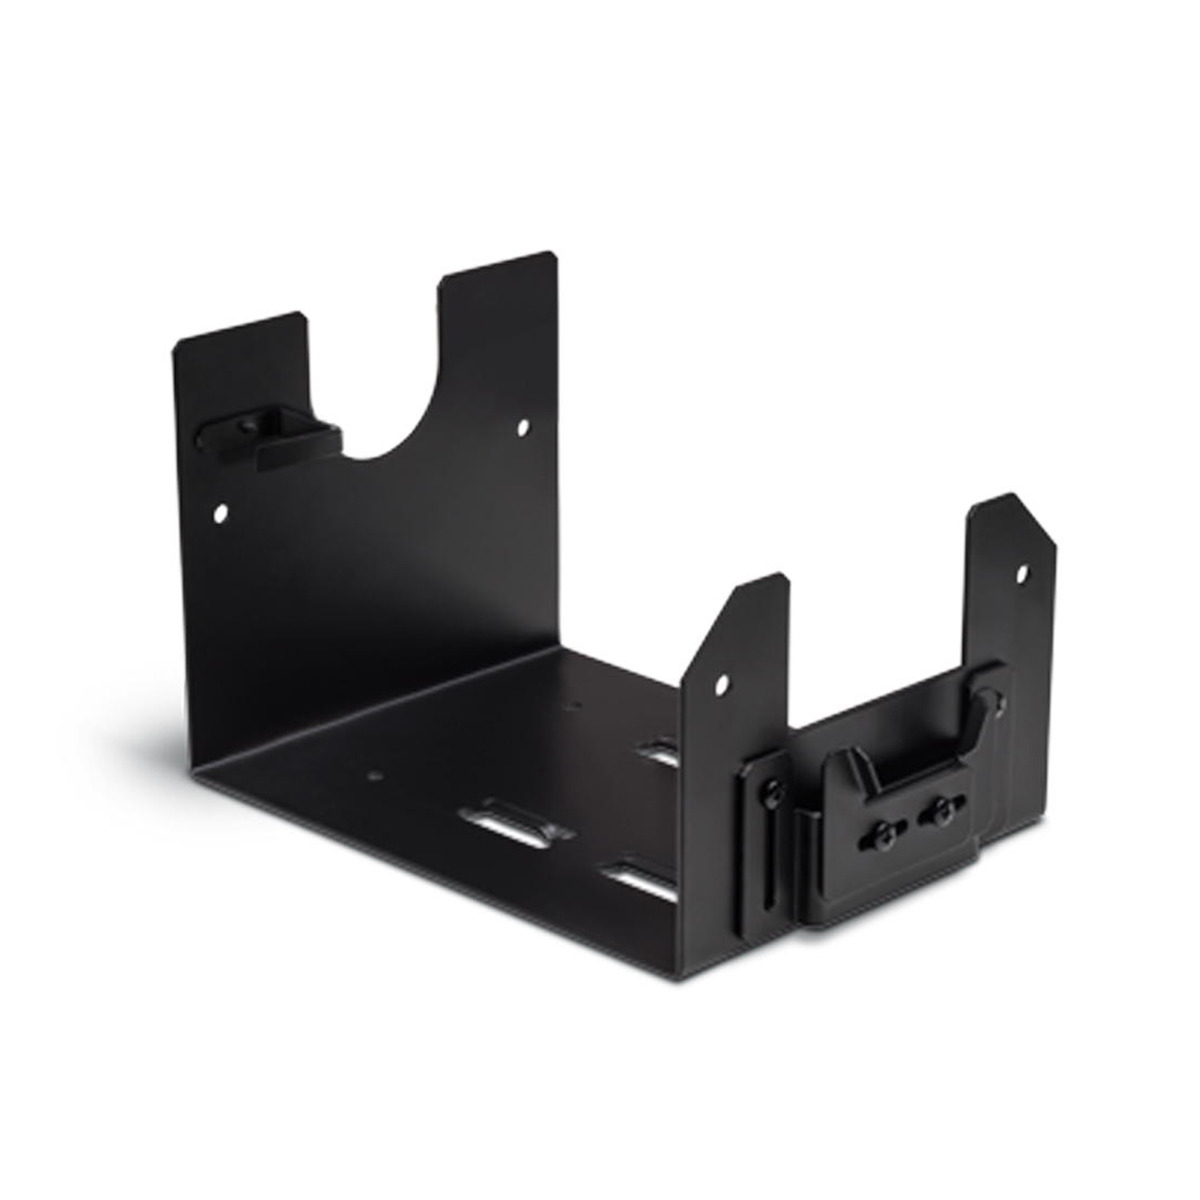 Heat Gun Stand compatible with Black + Decker Heat Guns HG1300 KX1800  holder bracket holster rack - 1058 Designs